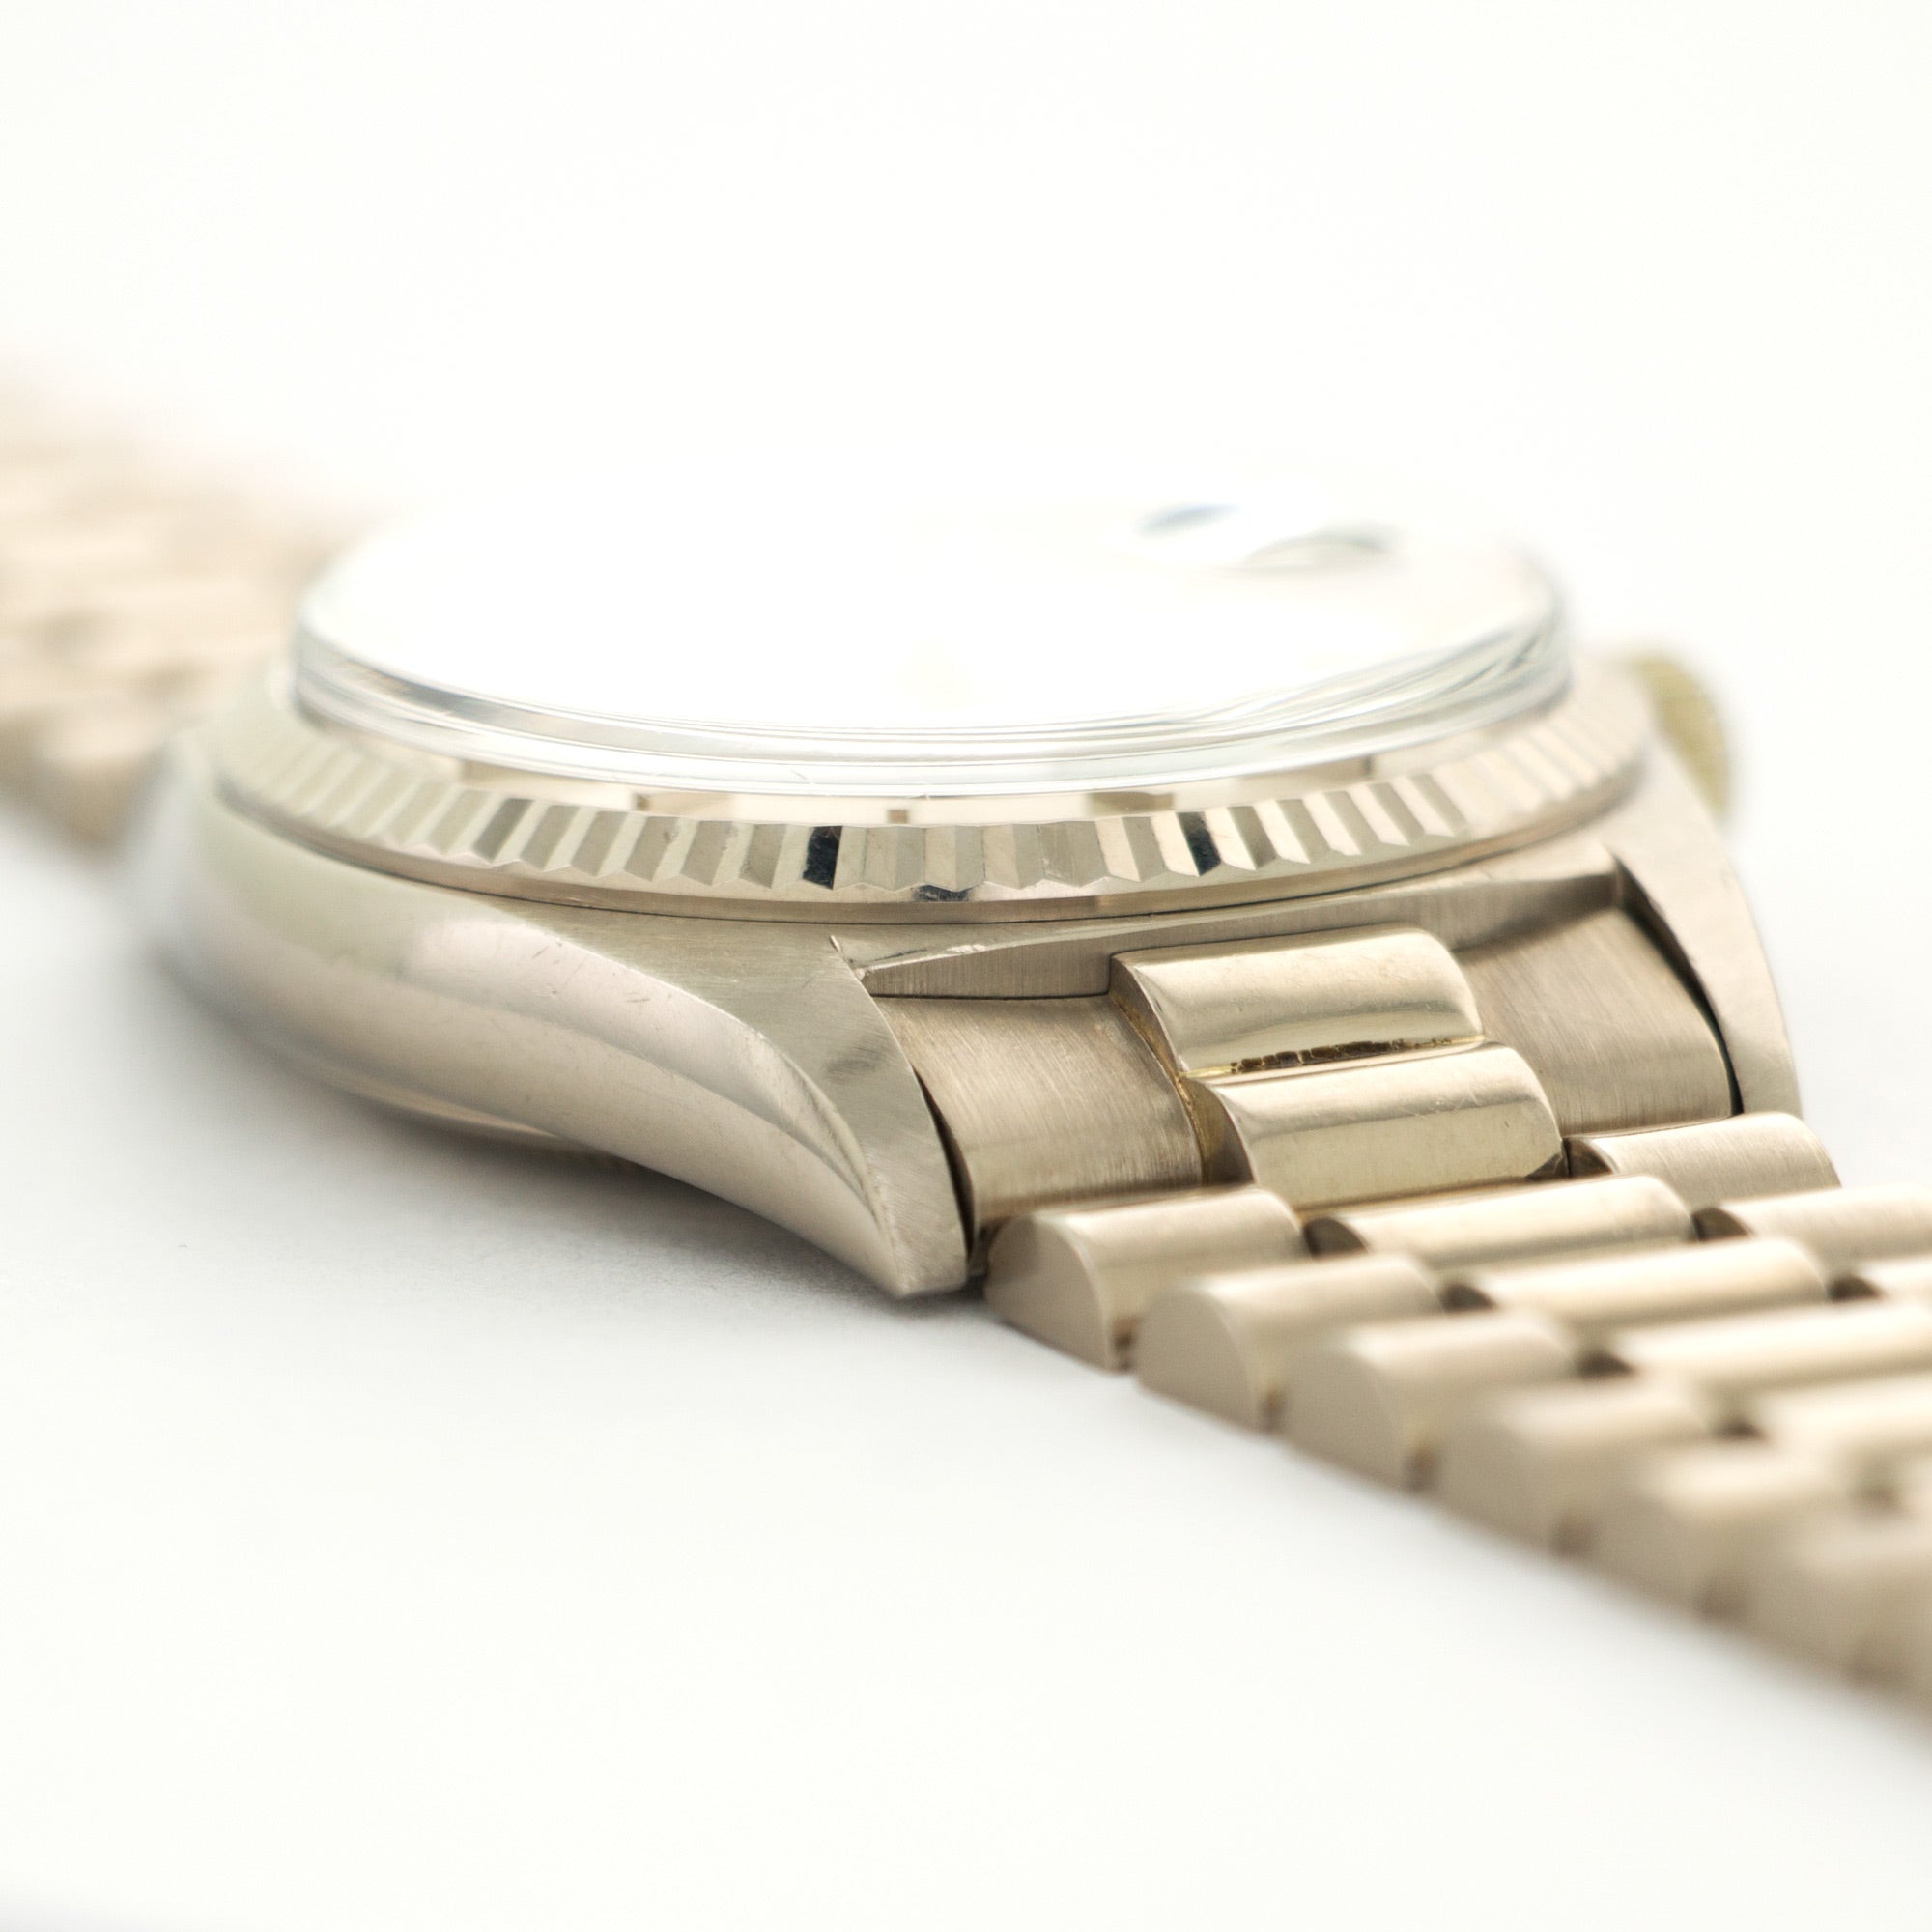 Rolex - Rolex White Gold Day-Date Watch Ref. 1803 with Original Paper - The Keystone Watches